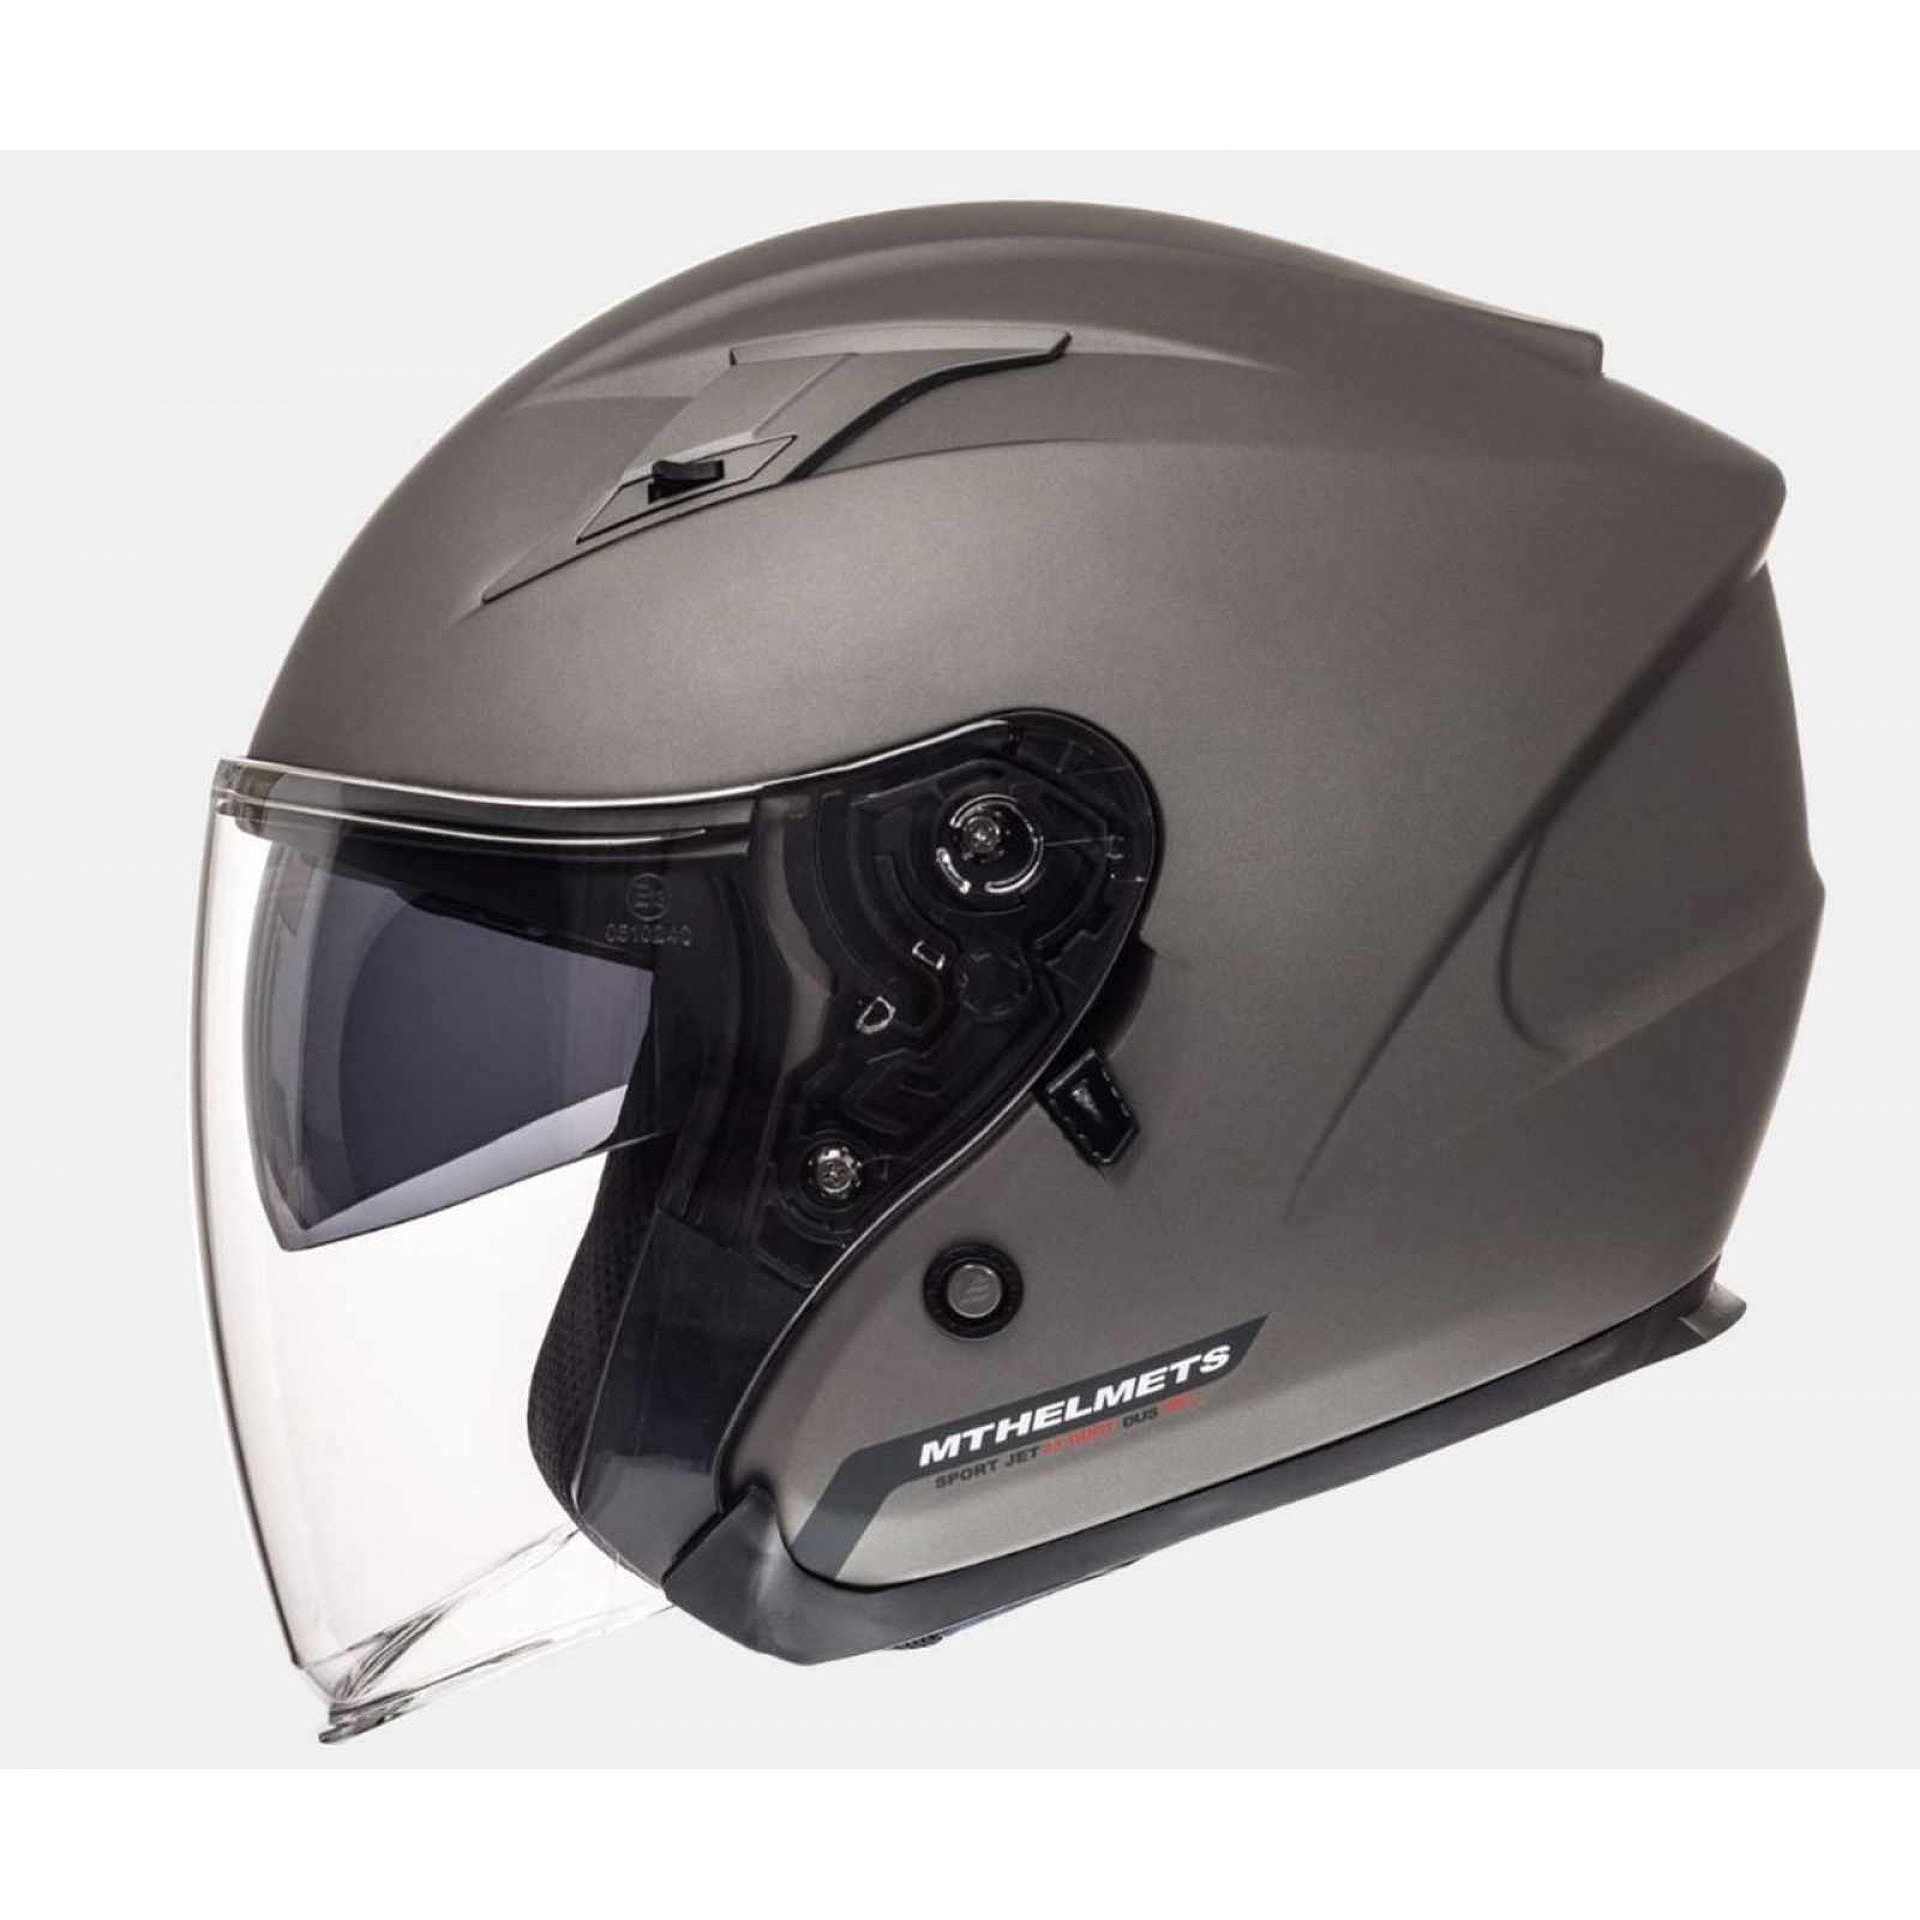 Helmet MT Helmets Avenue SV Solid Titanium Motorcycle Helmet For Sale Online - Outletmoto.eu